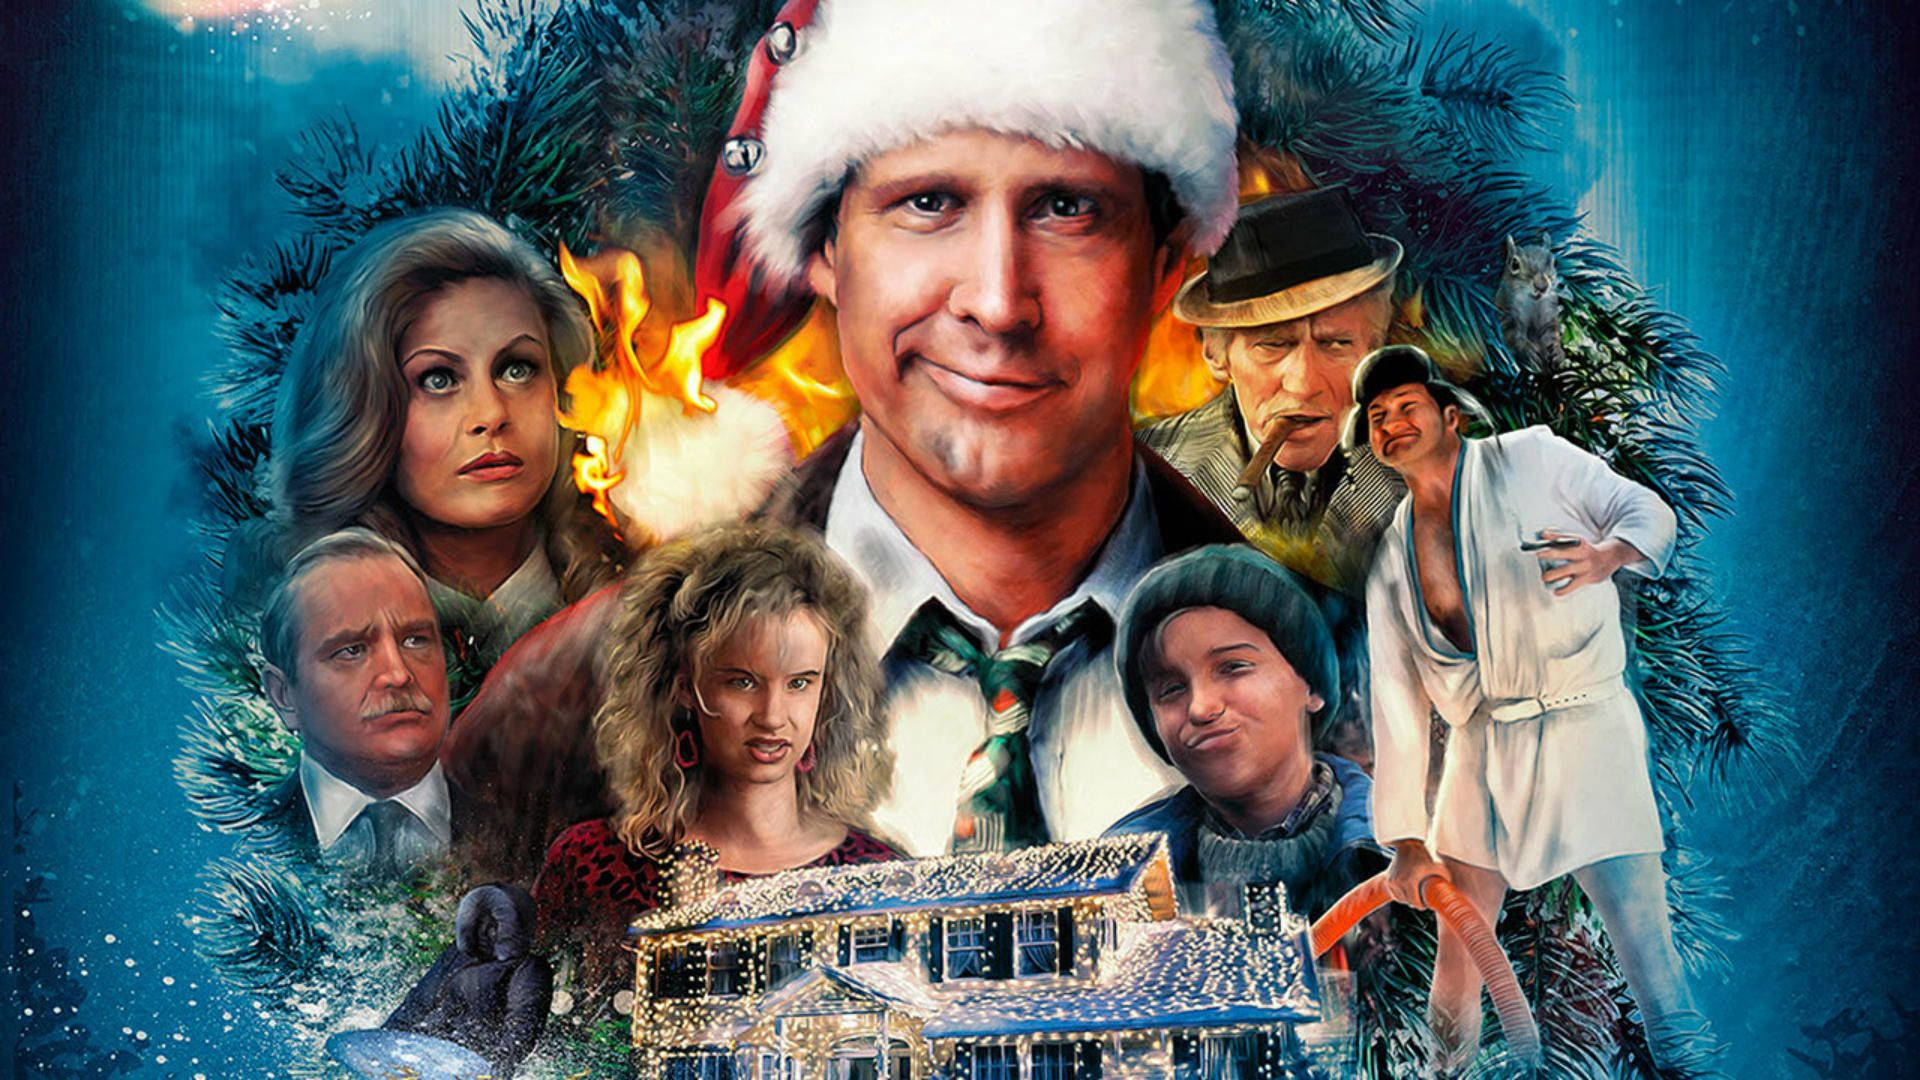 on Snowy Background - Julefilmen National Lampoon's Christmas Vacation-ensemble på snelandskab. Wallpaper